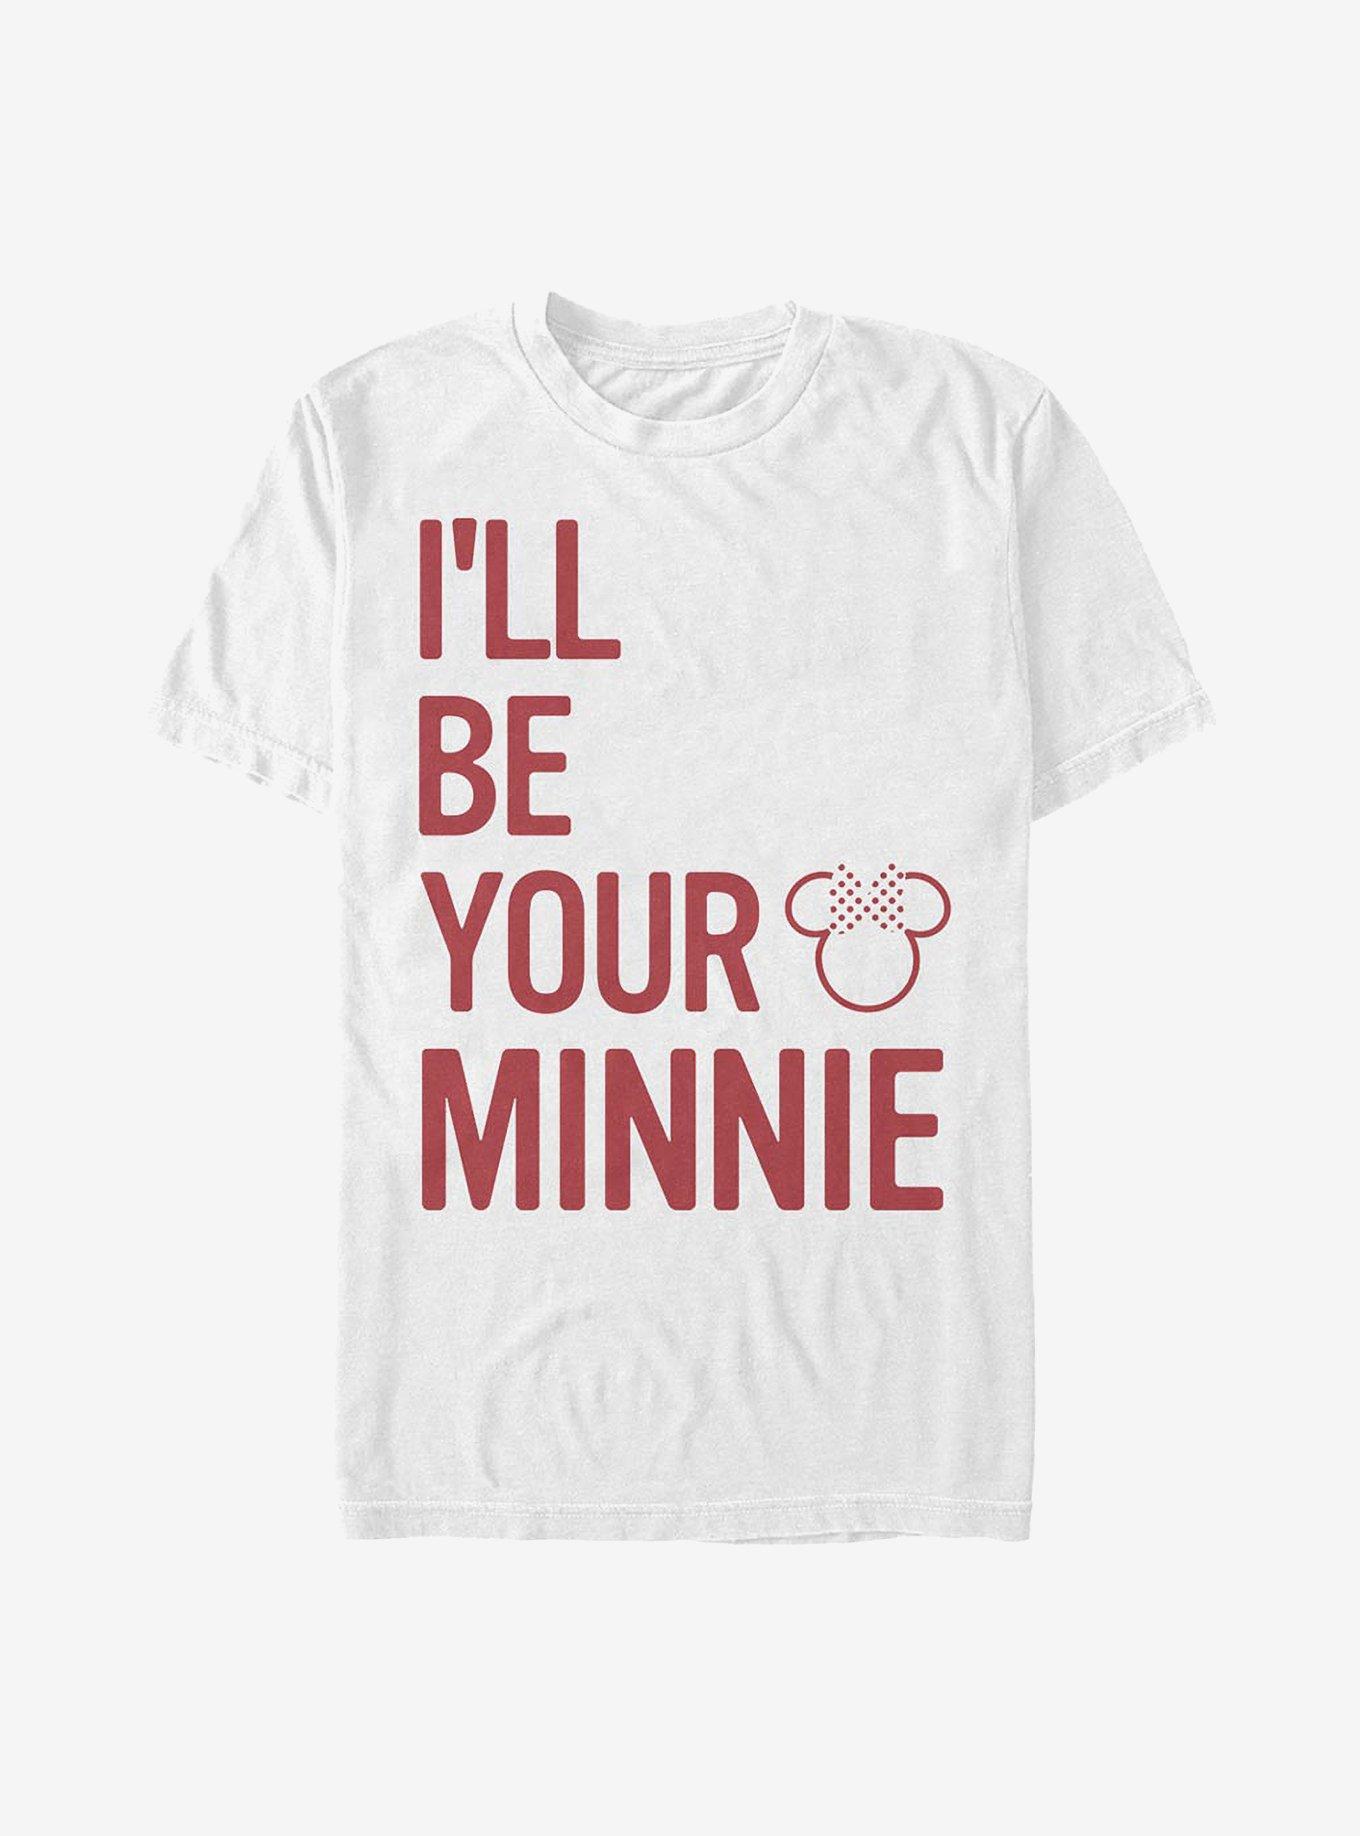 Disney Minnie Mouse Your Minnie T-Shirt, , hi-res